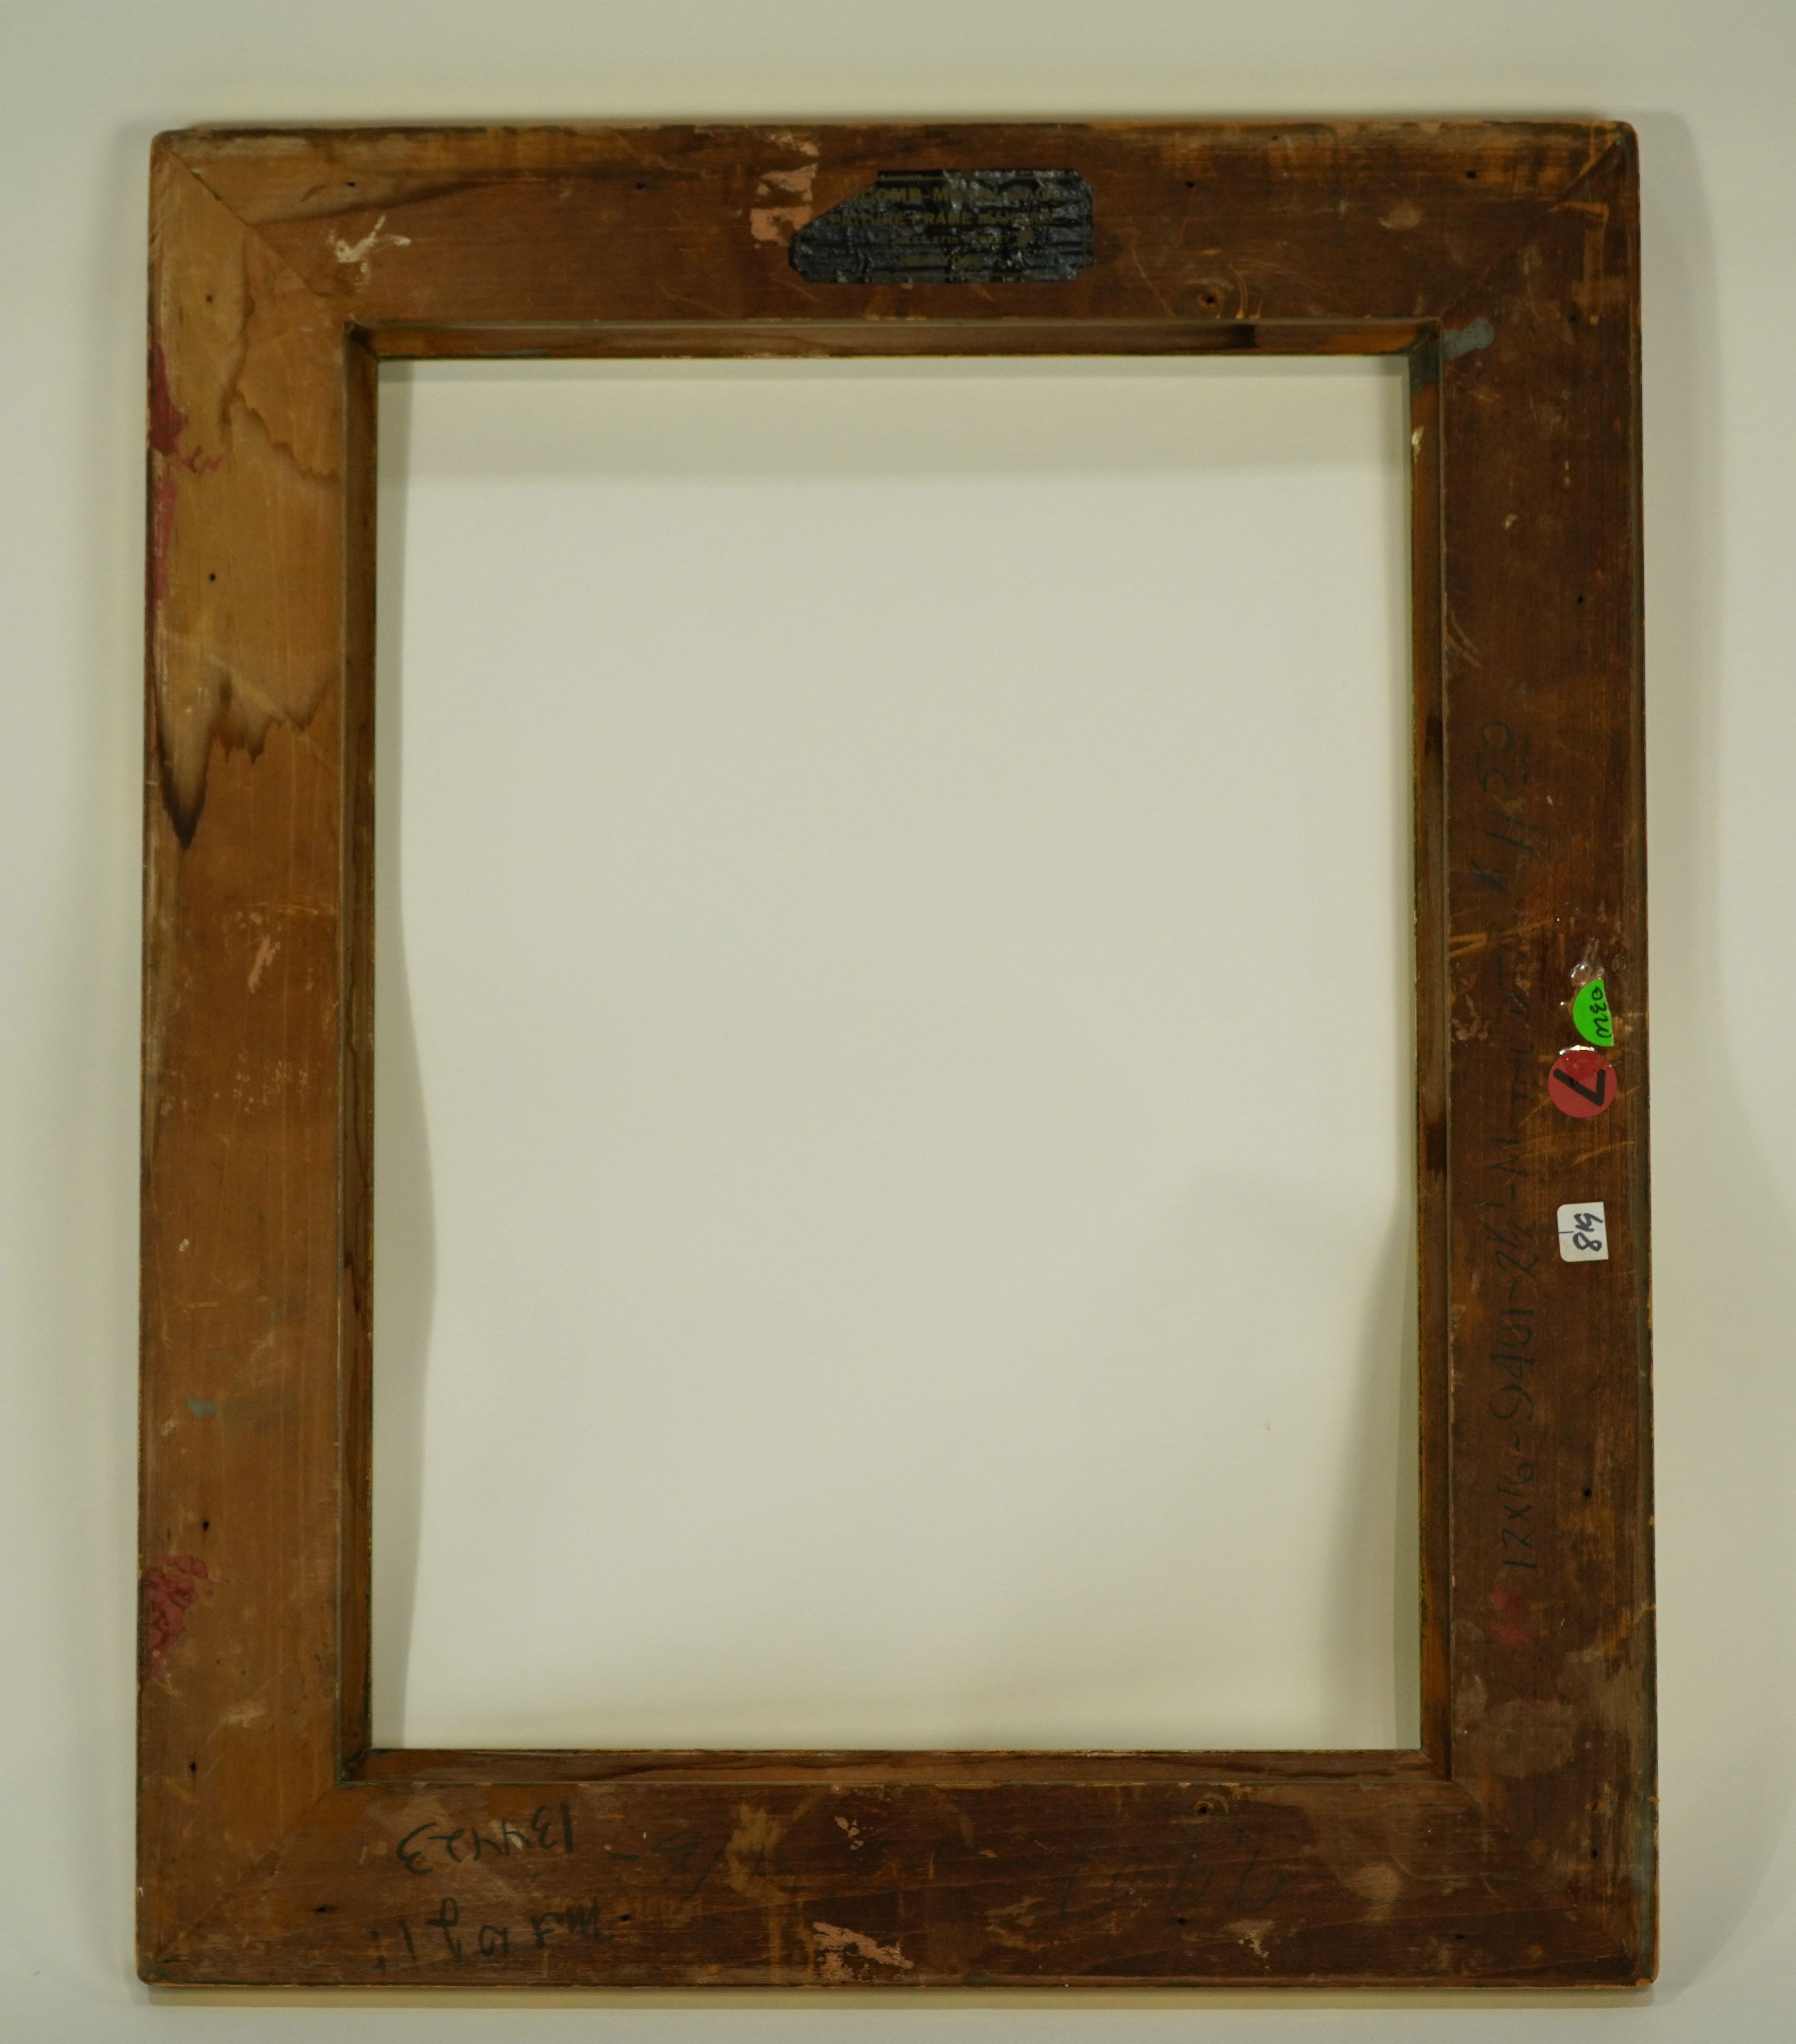 Newcomb-Macklin frame - Image 2 of 3